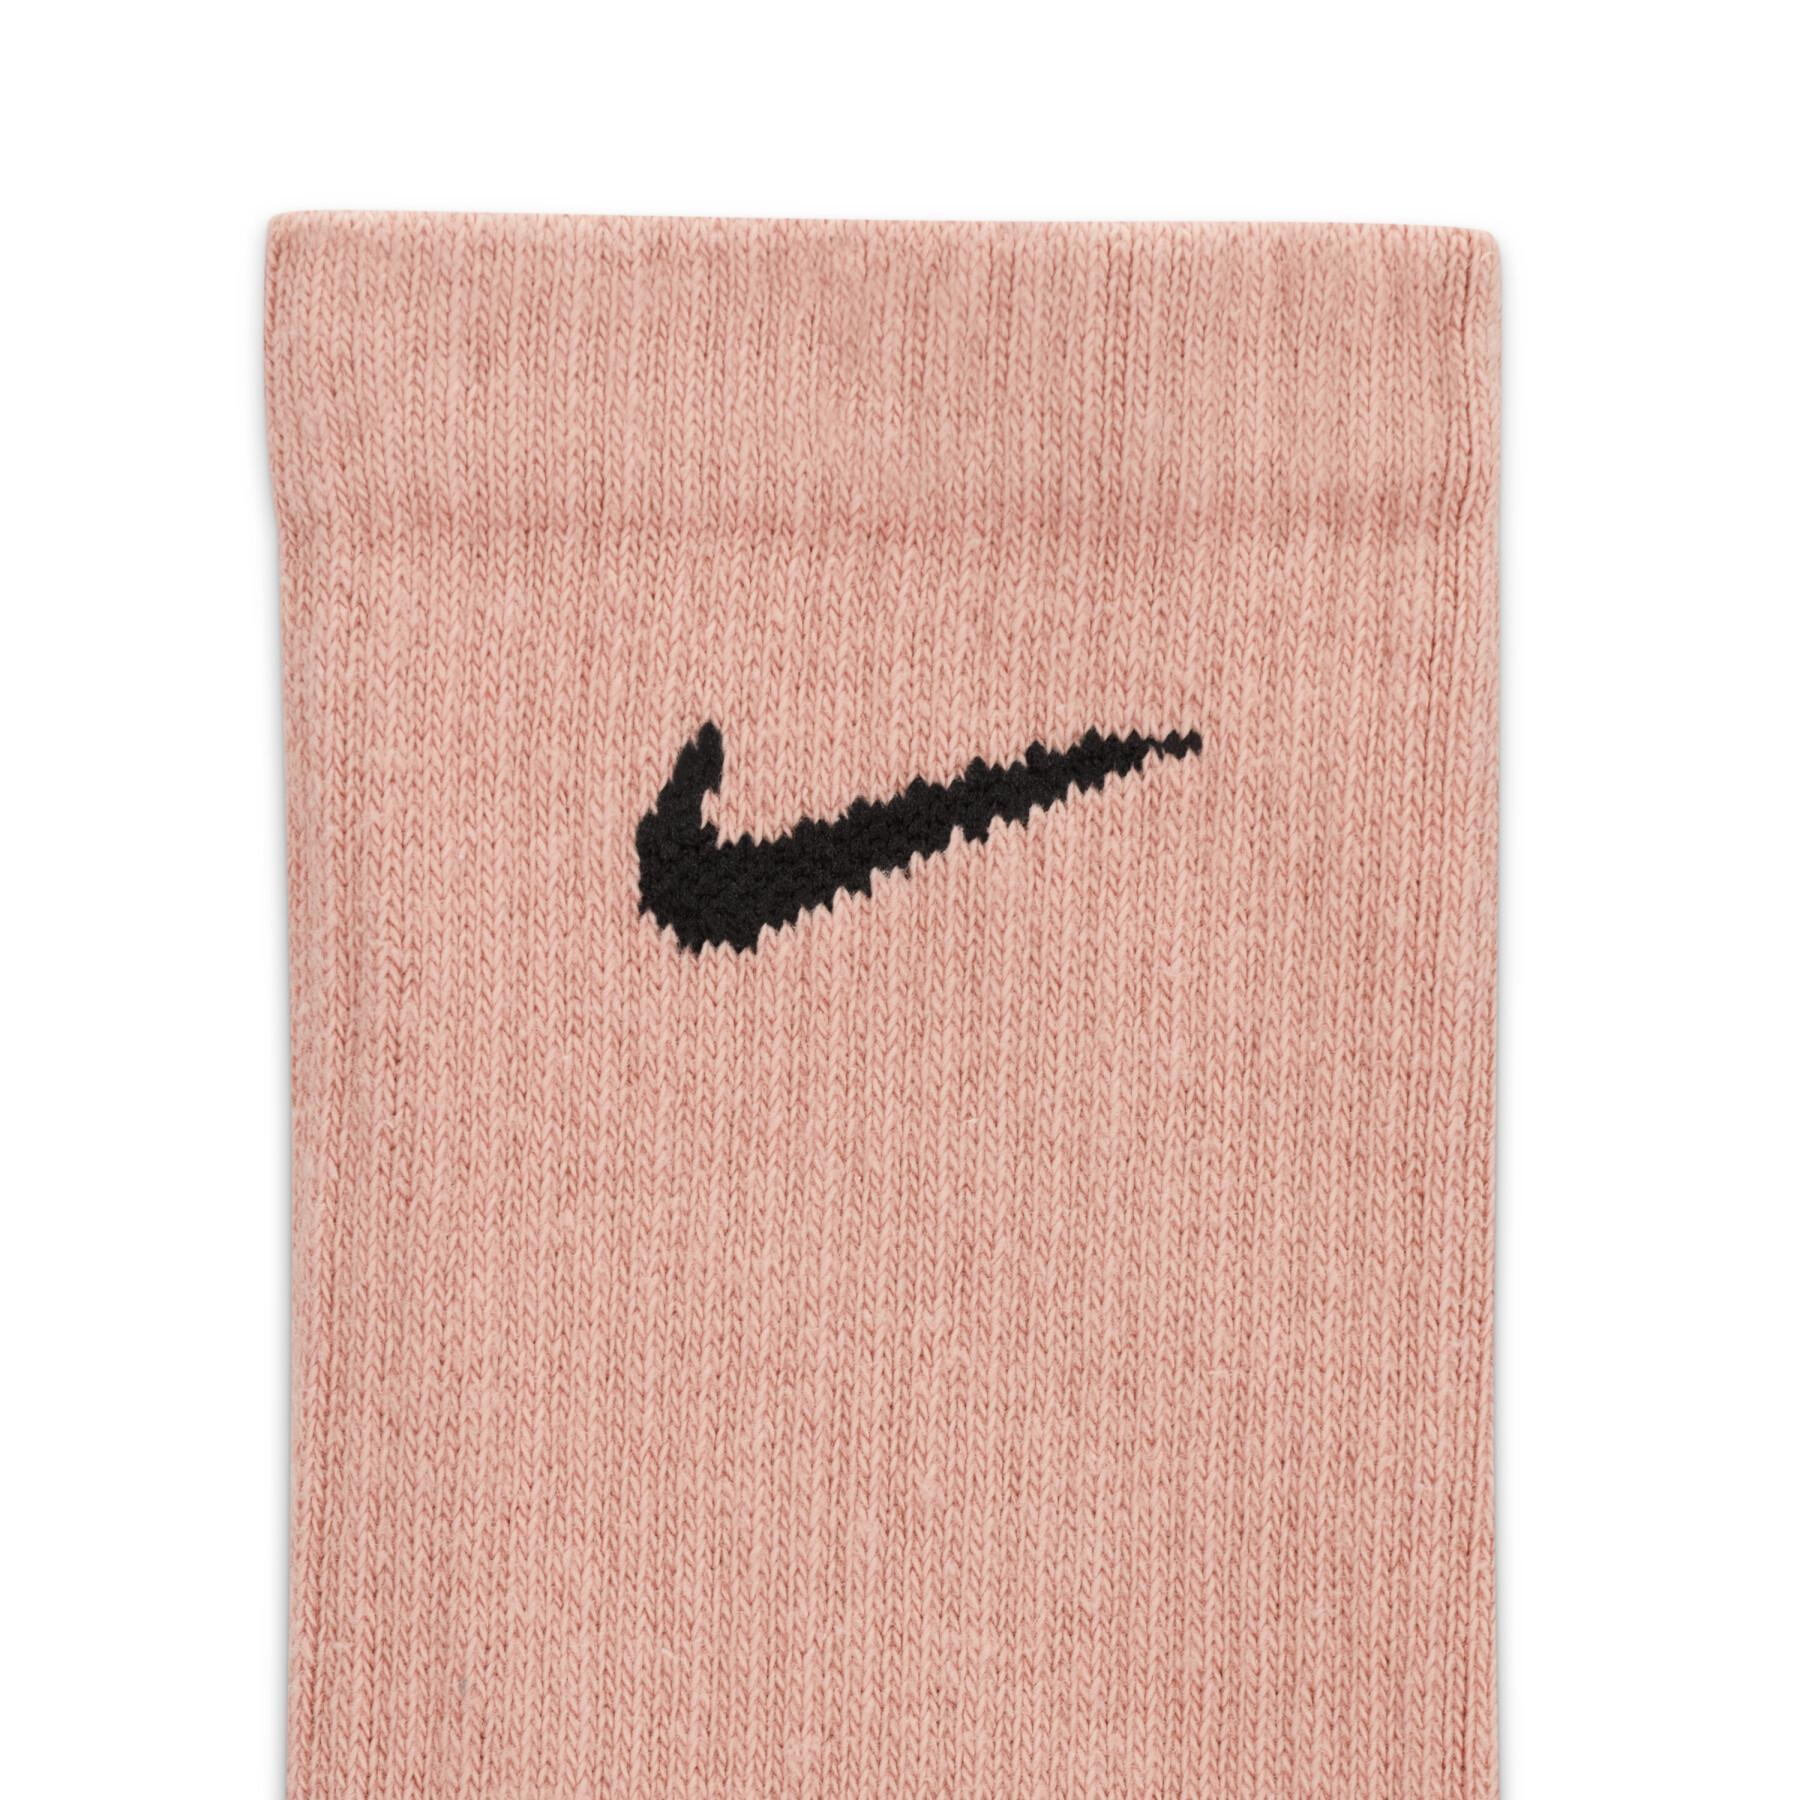 Socken Nike Everyday Plus Cushioned (x6)